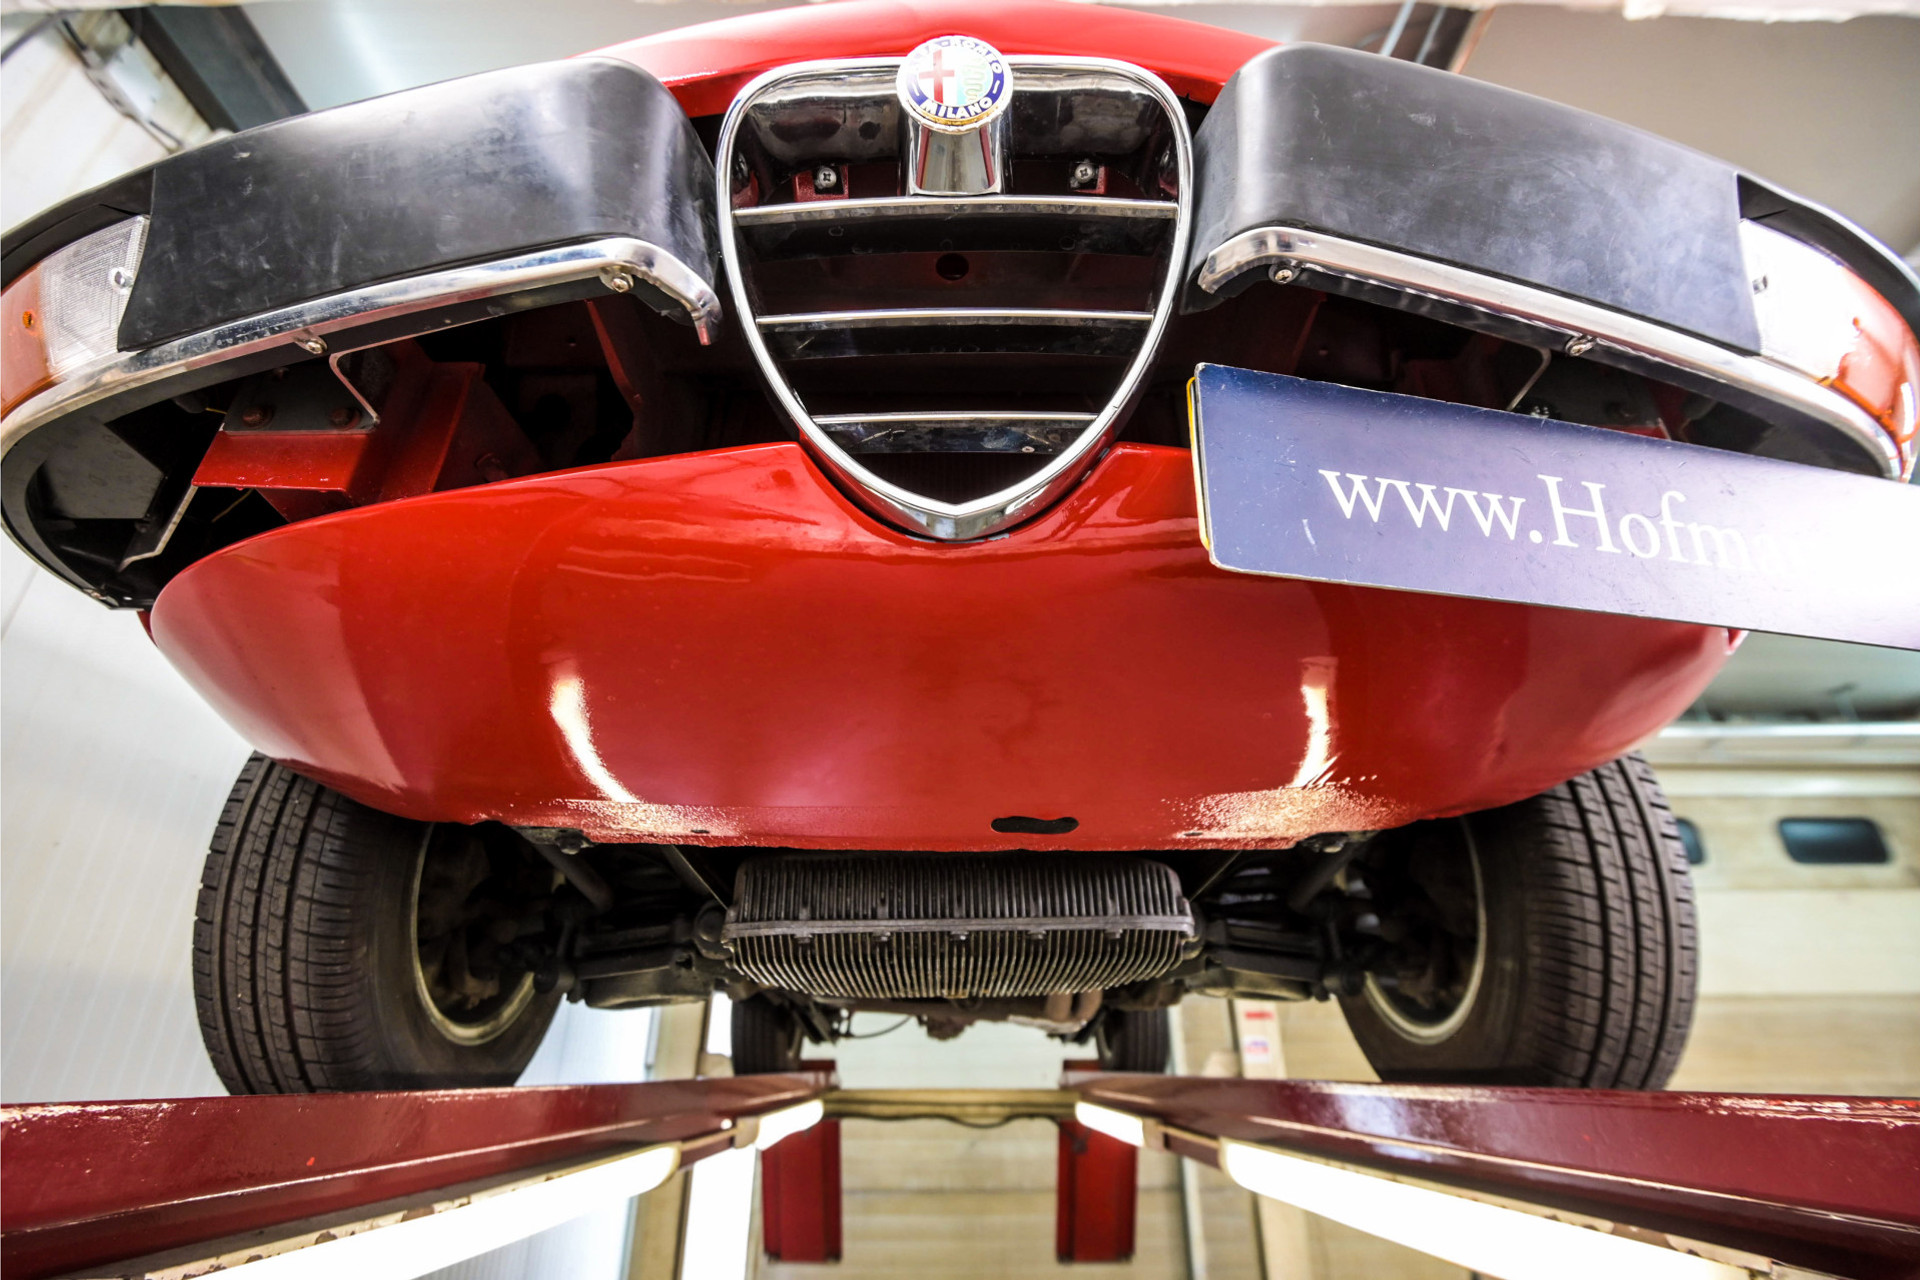 Alfa Romeo Spider 2.0 Coda Tronca Foto 64